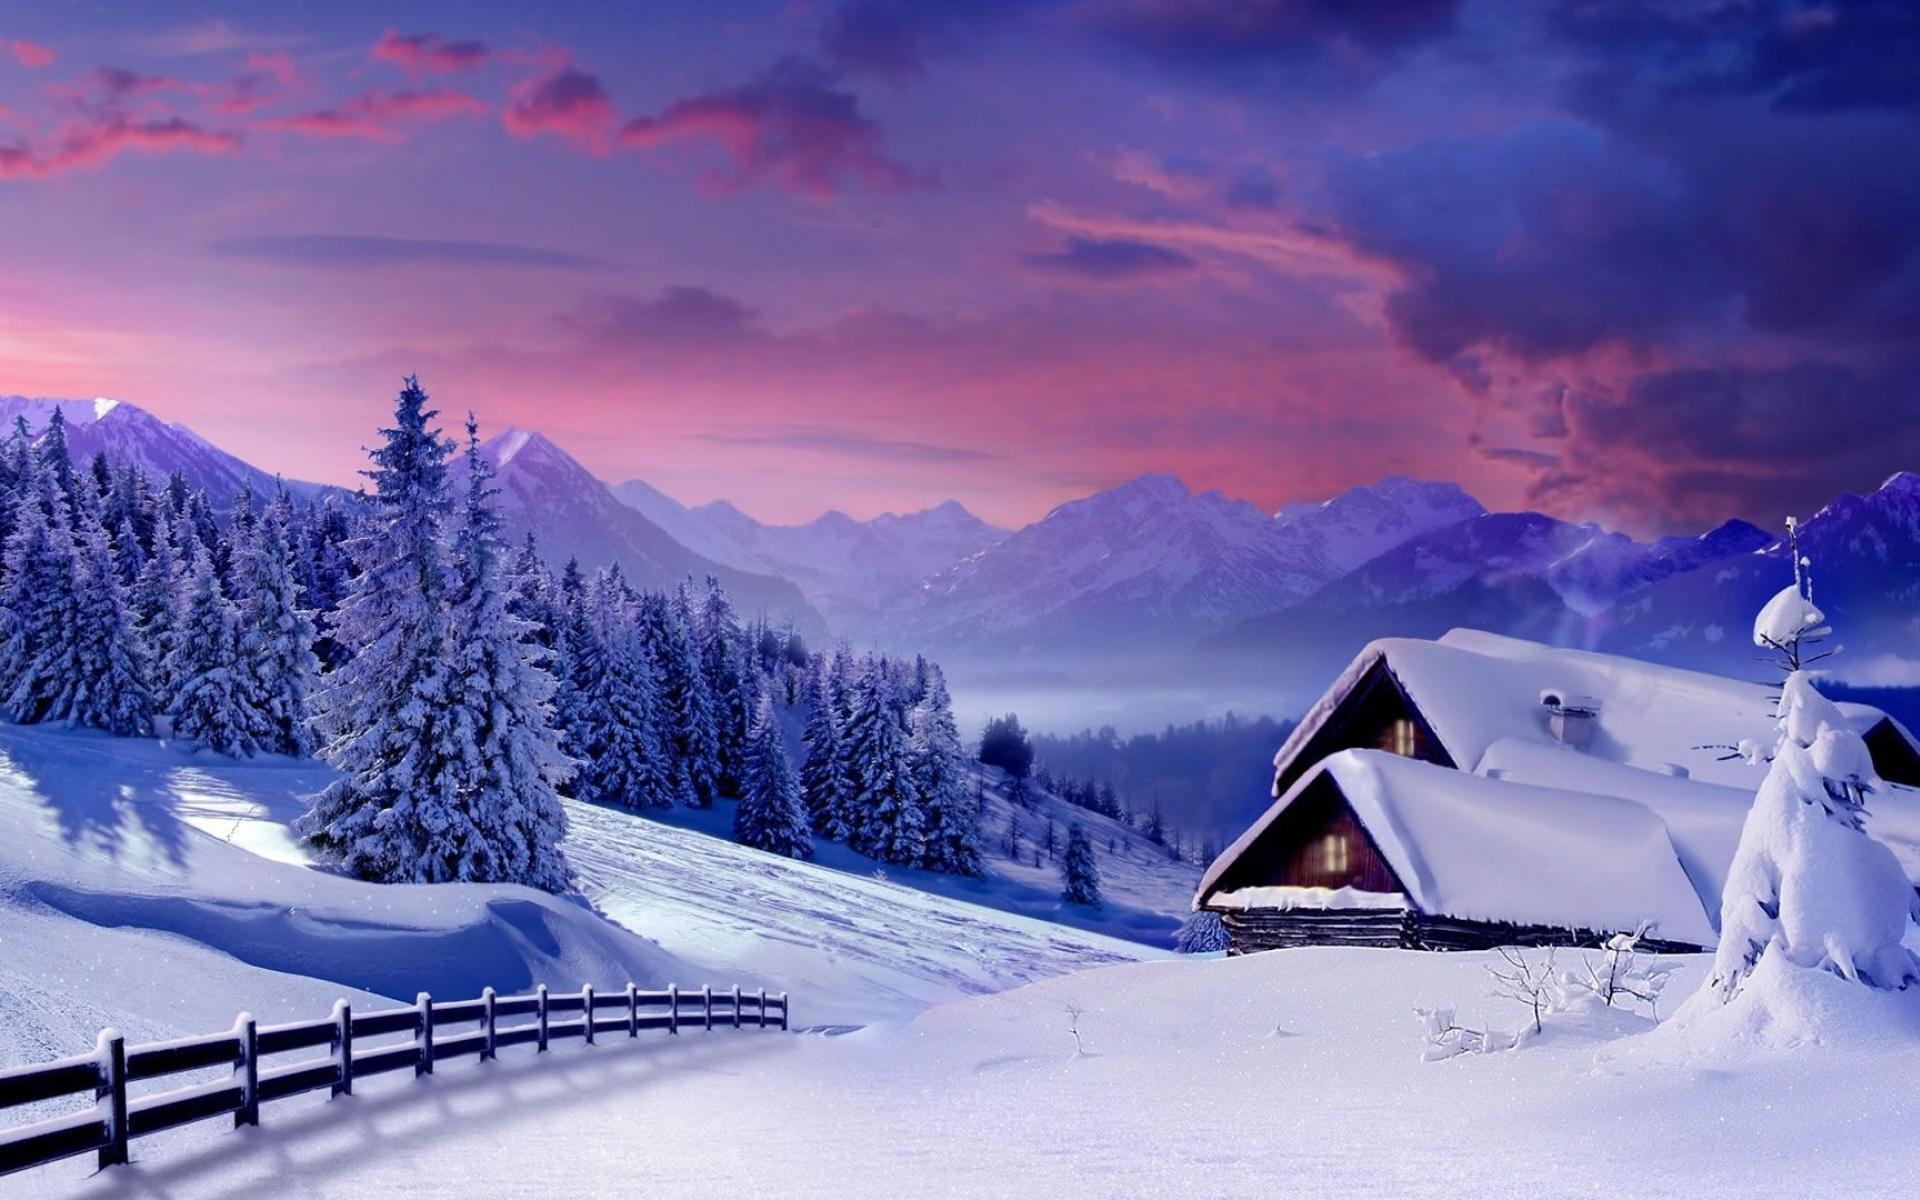 Winter Snow Cabin Wallpaper